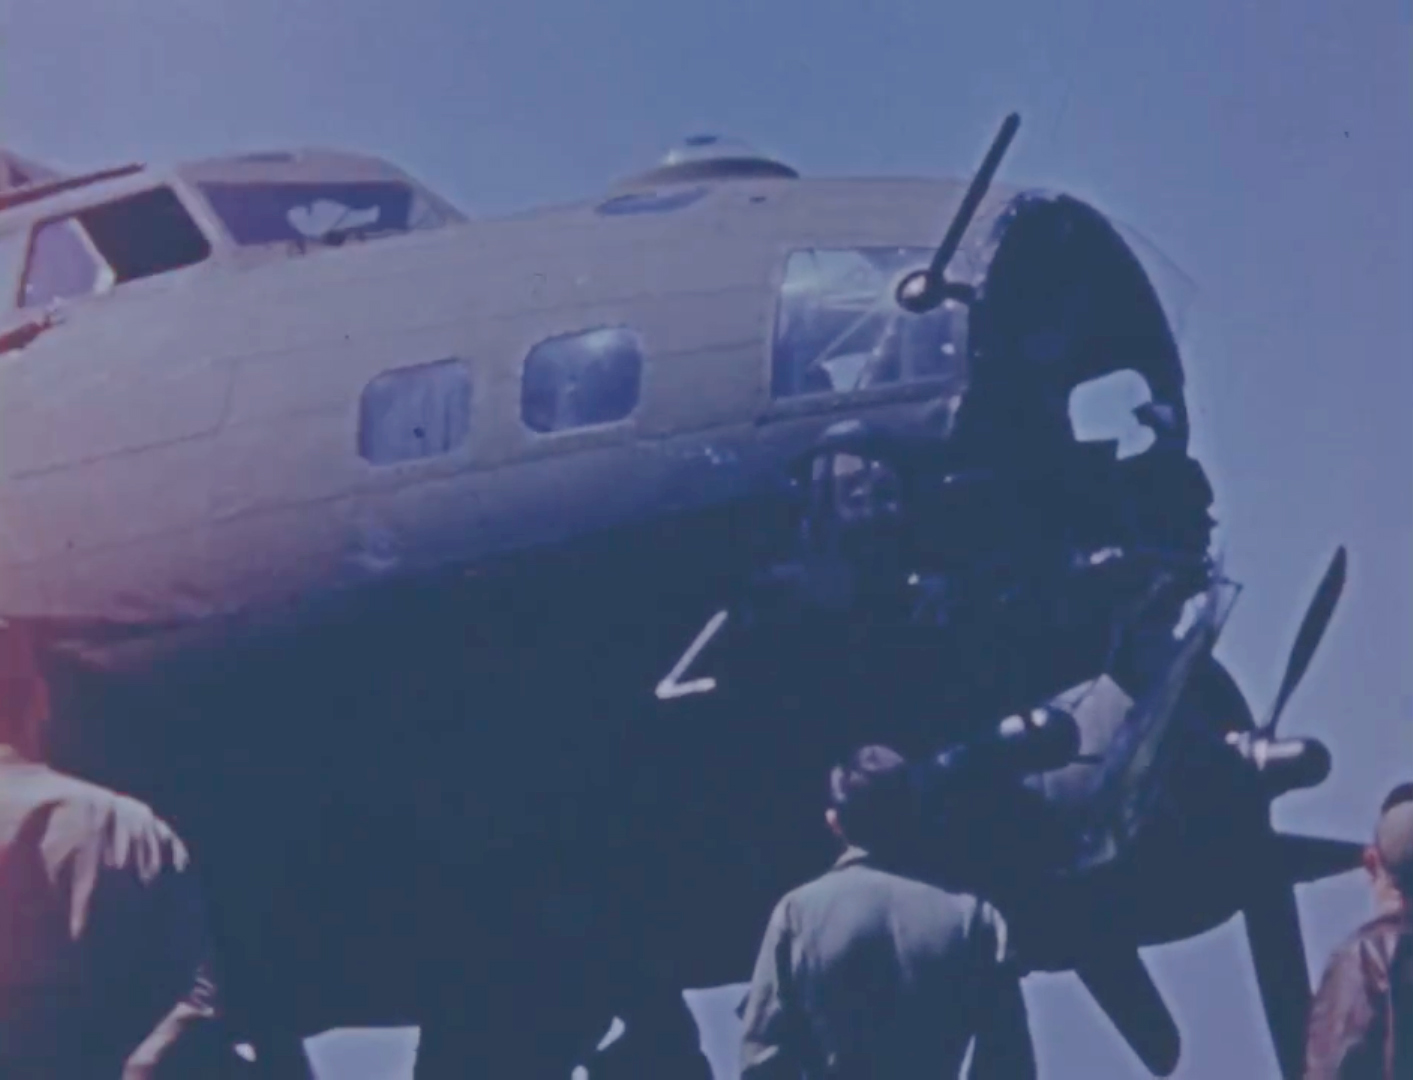 B-17 #42-29673 / Old Bill